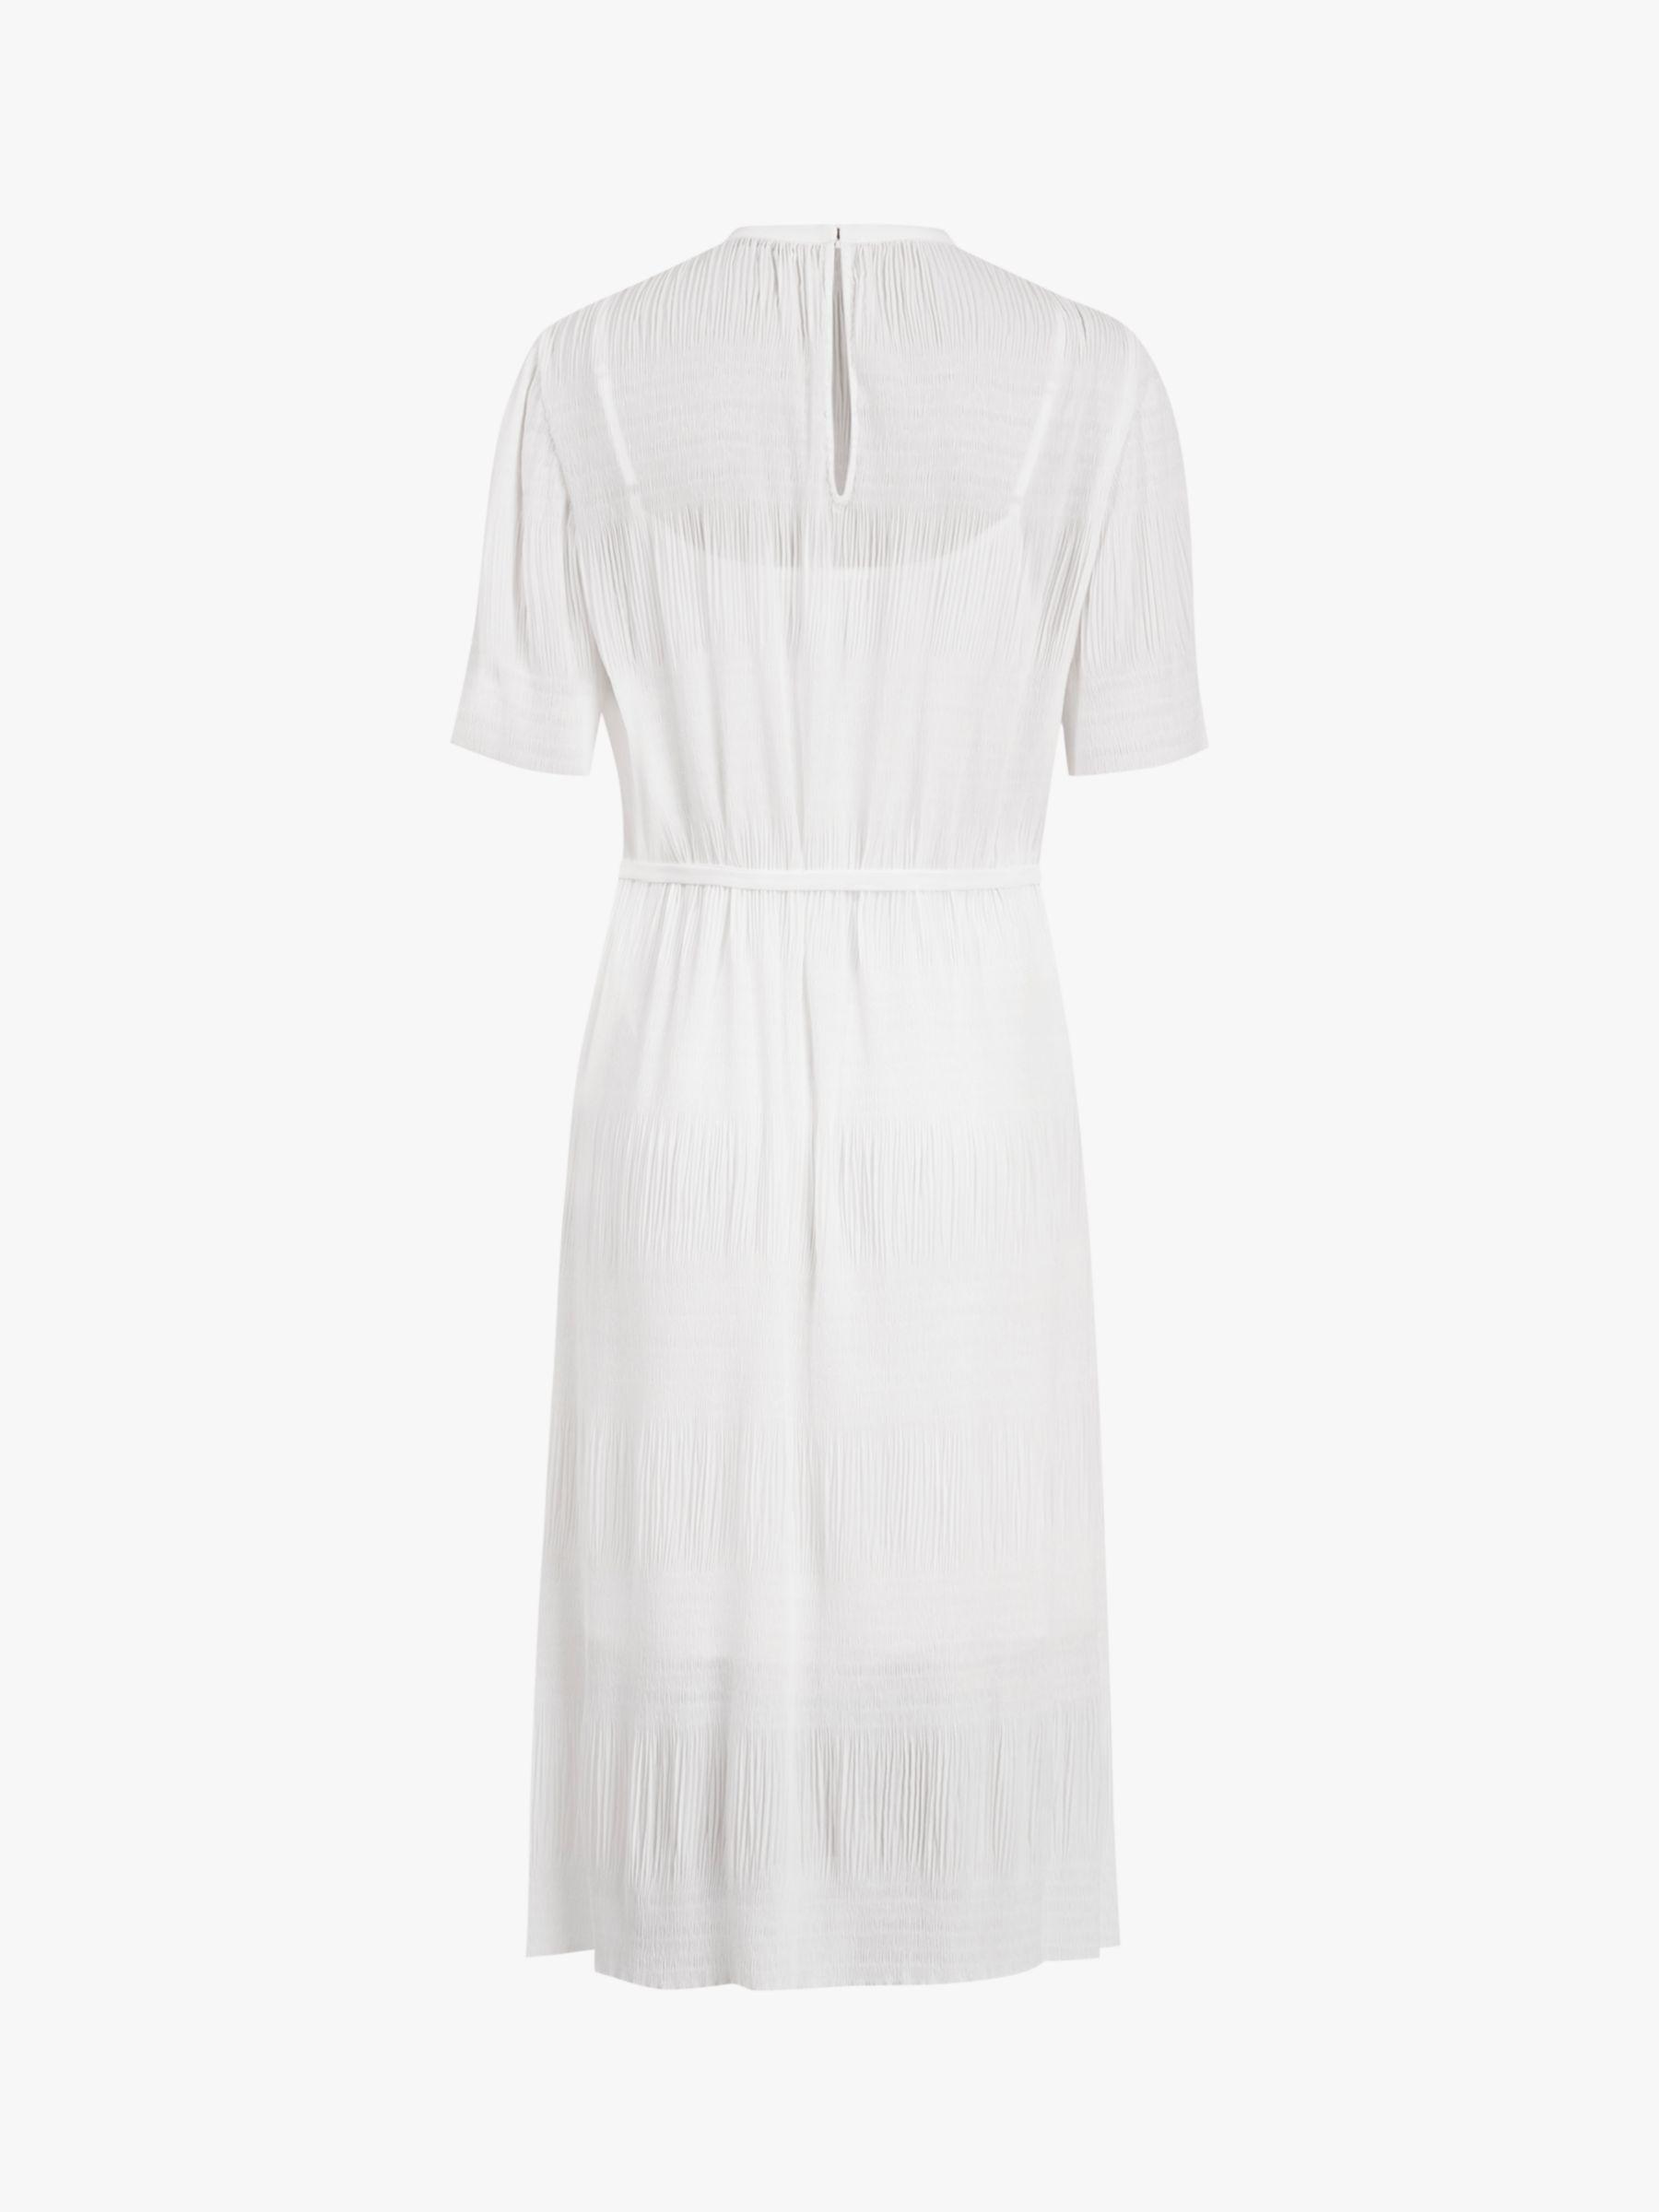 AllSaints Kano Round Neck Short Sleeved Dress, Chalk White